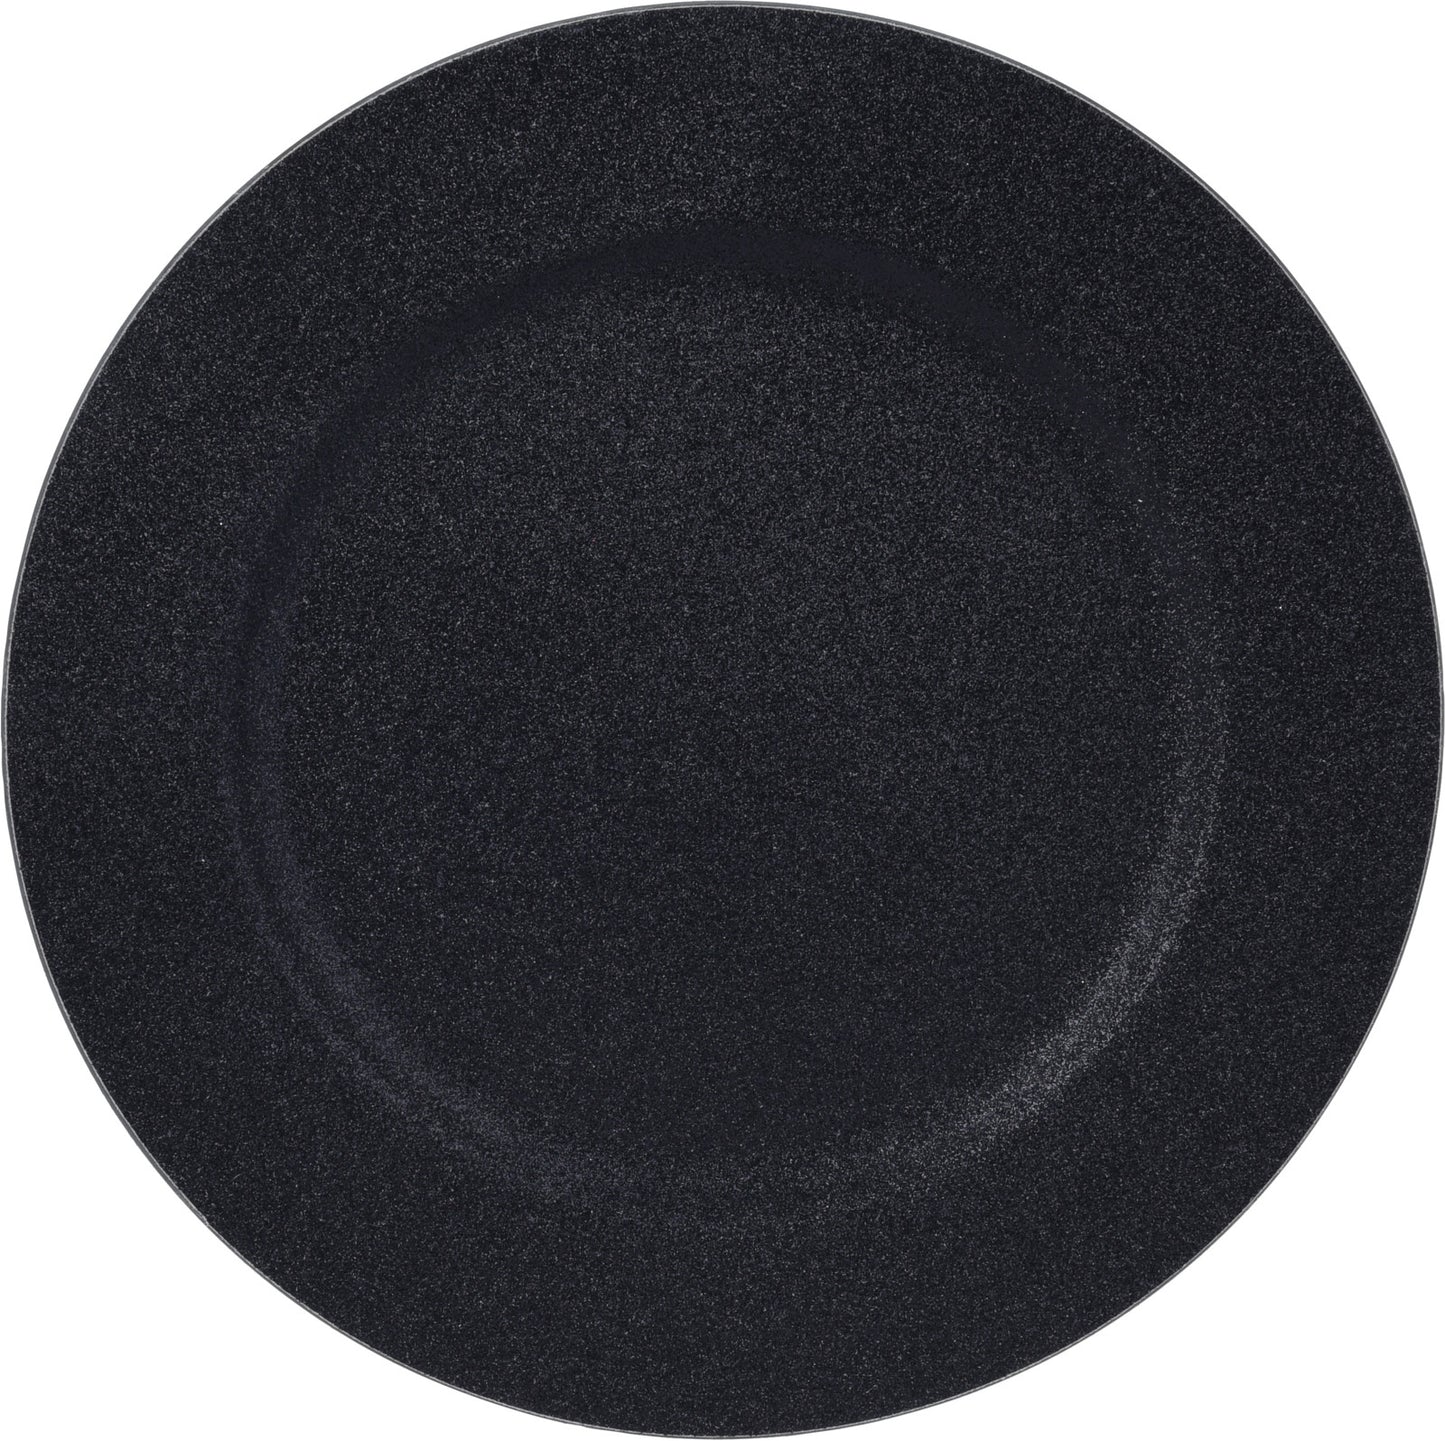 Black Glitter Plate